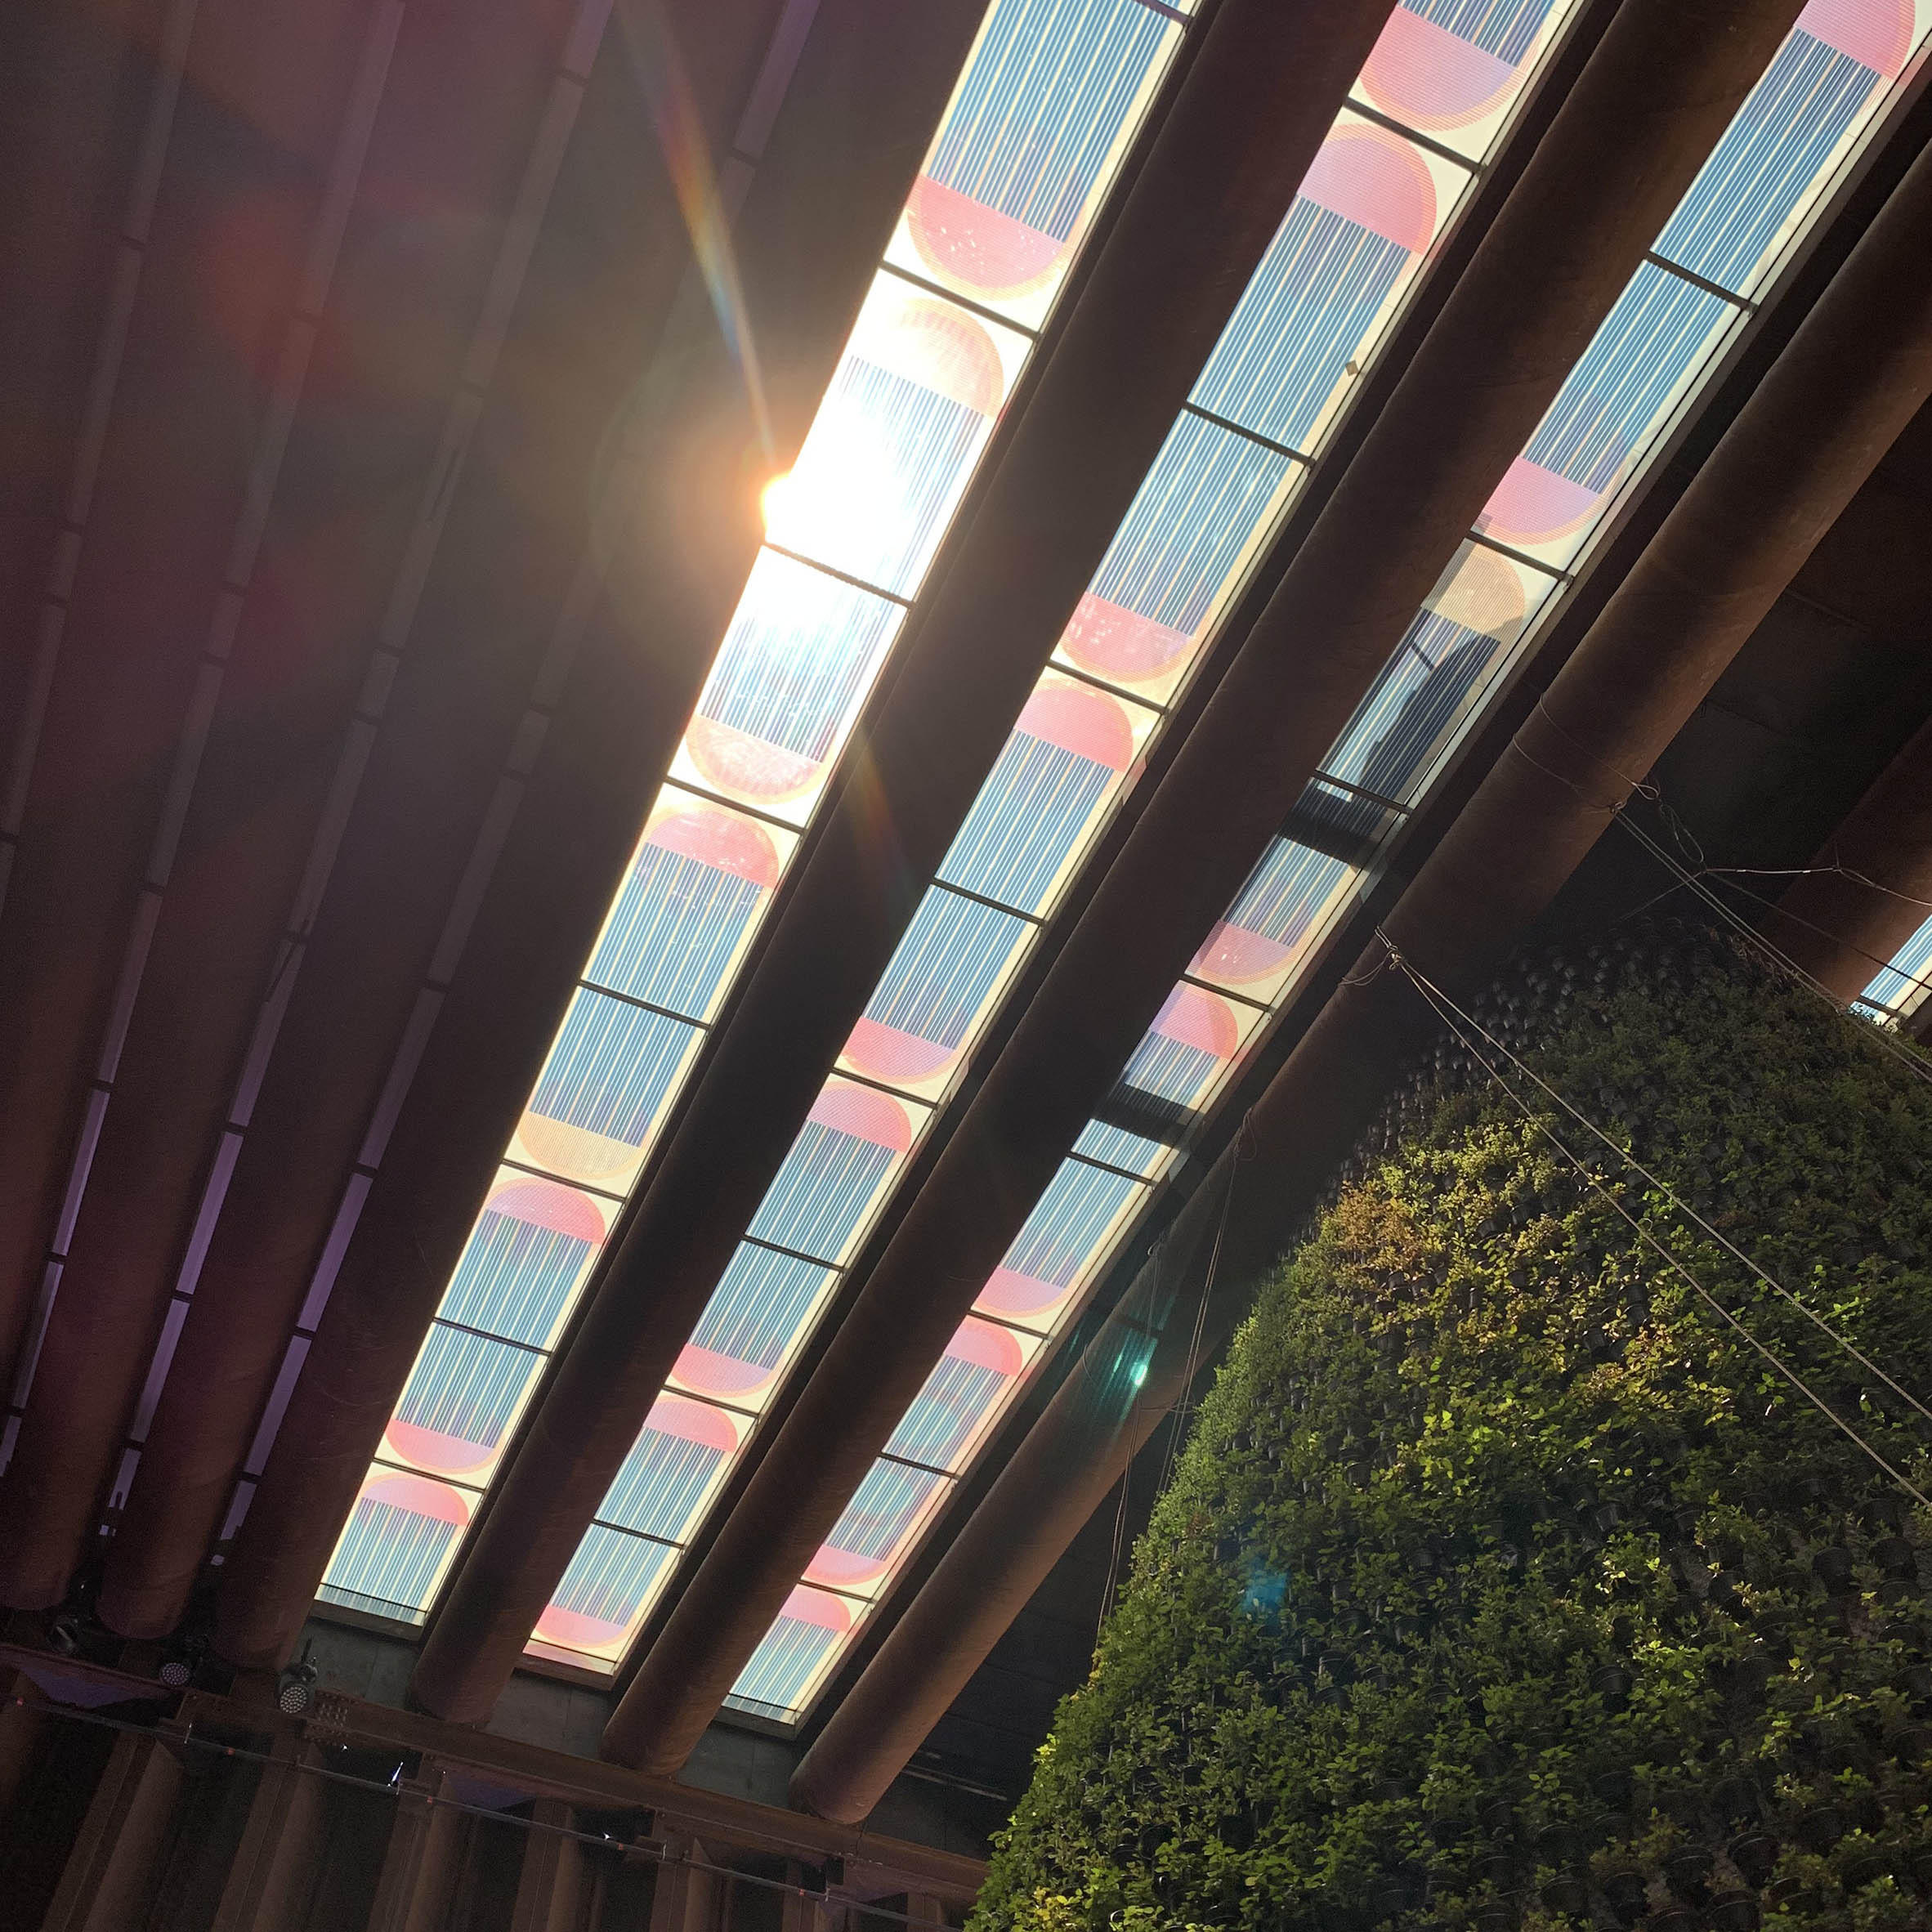 Solar panels by Marjane van Aubel on the Dutch Biotope pavilion at Expo 2020 Dubai